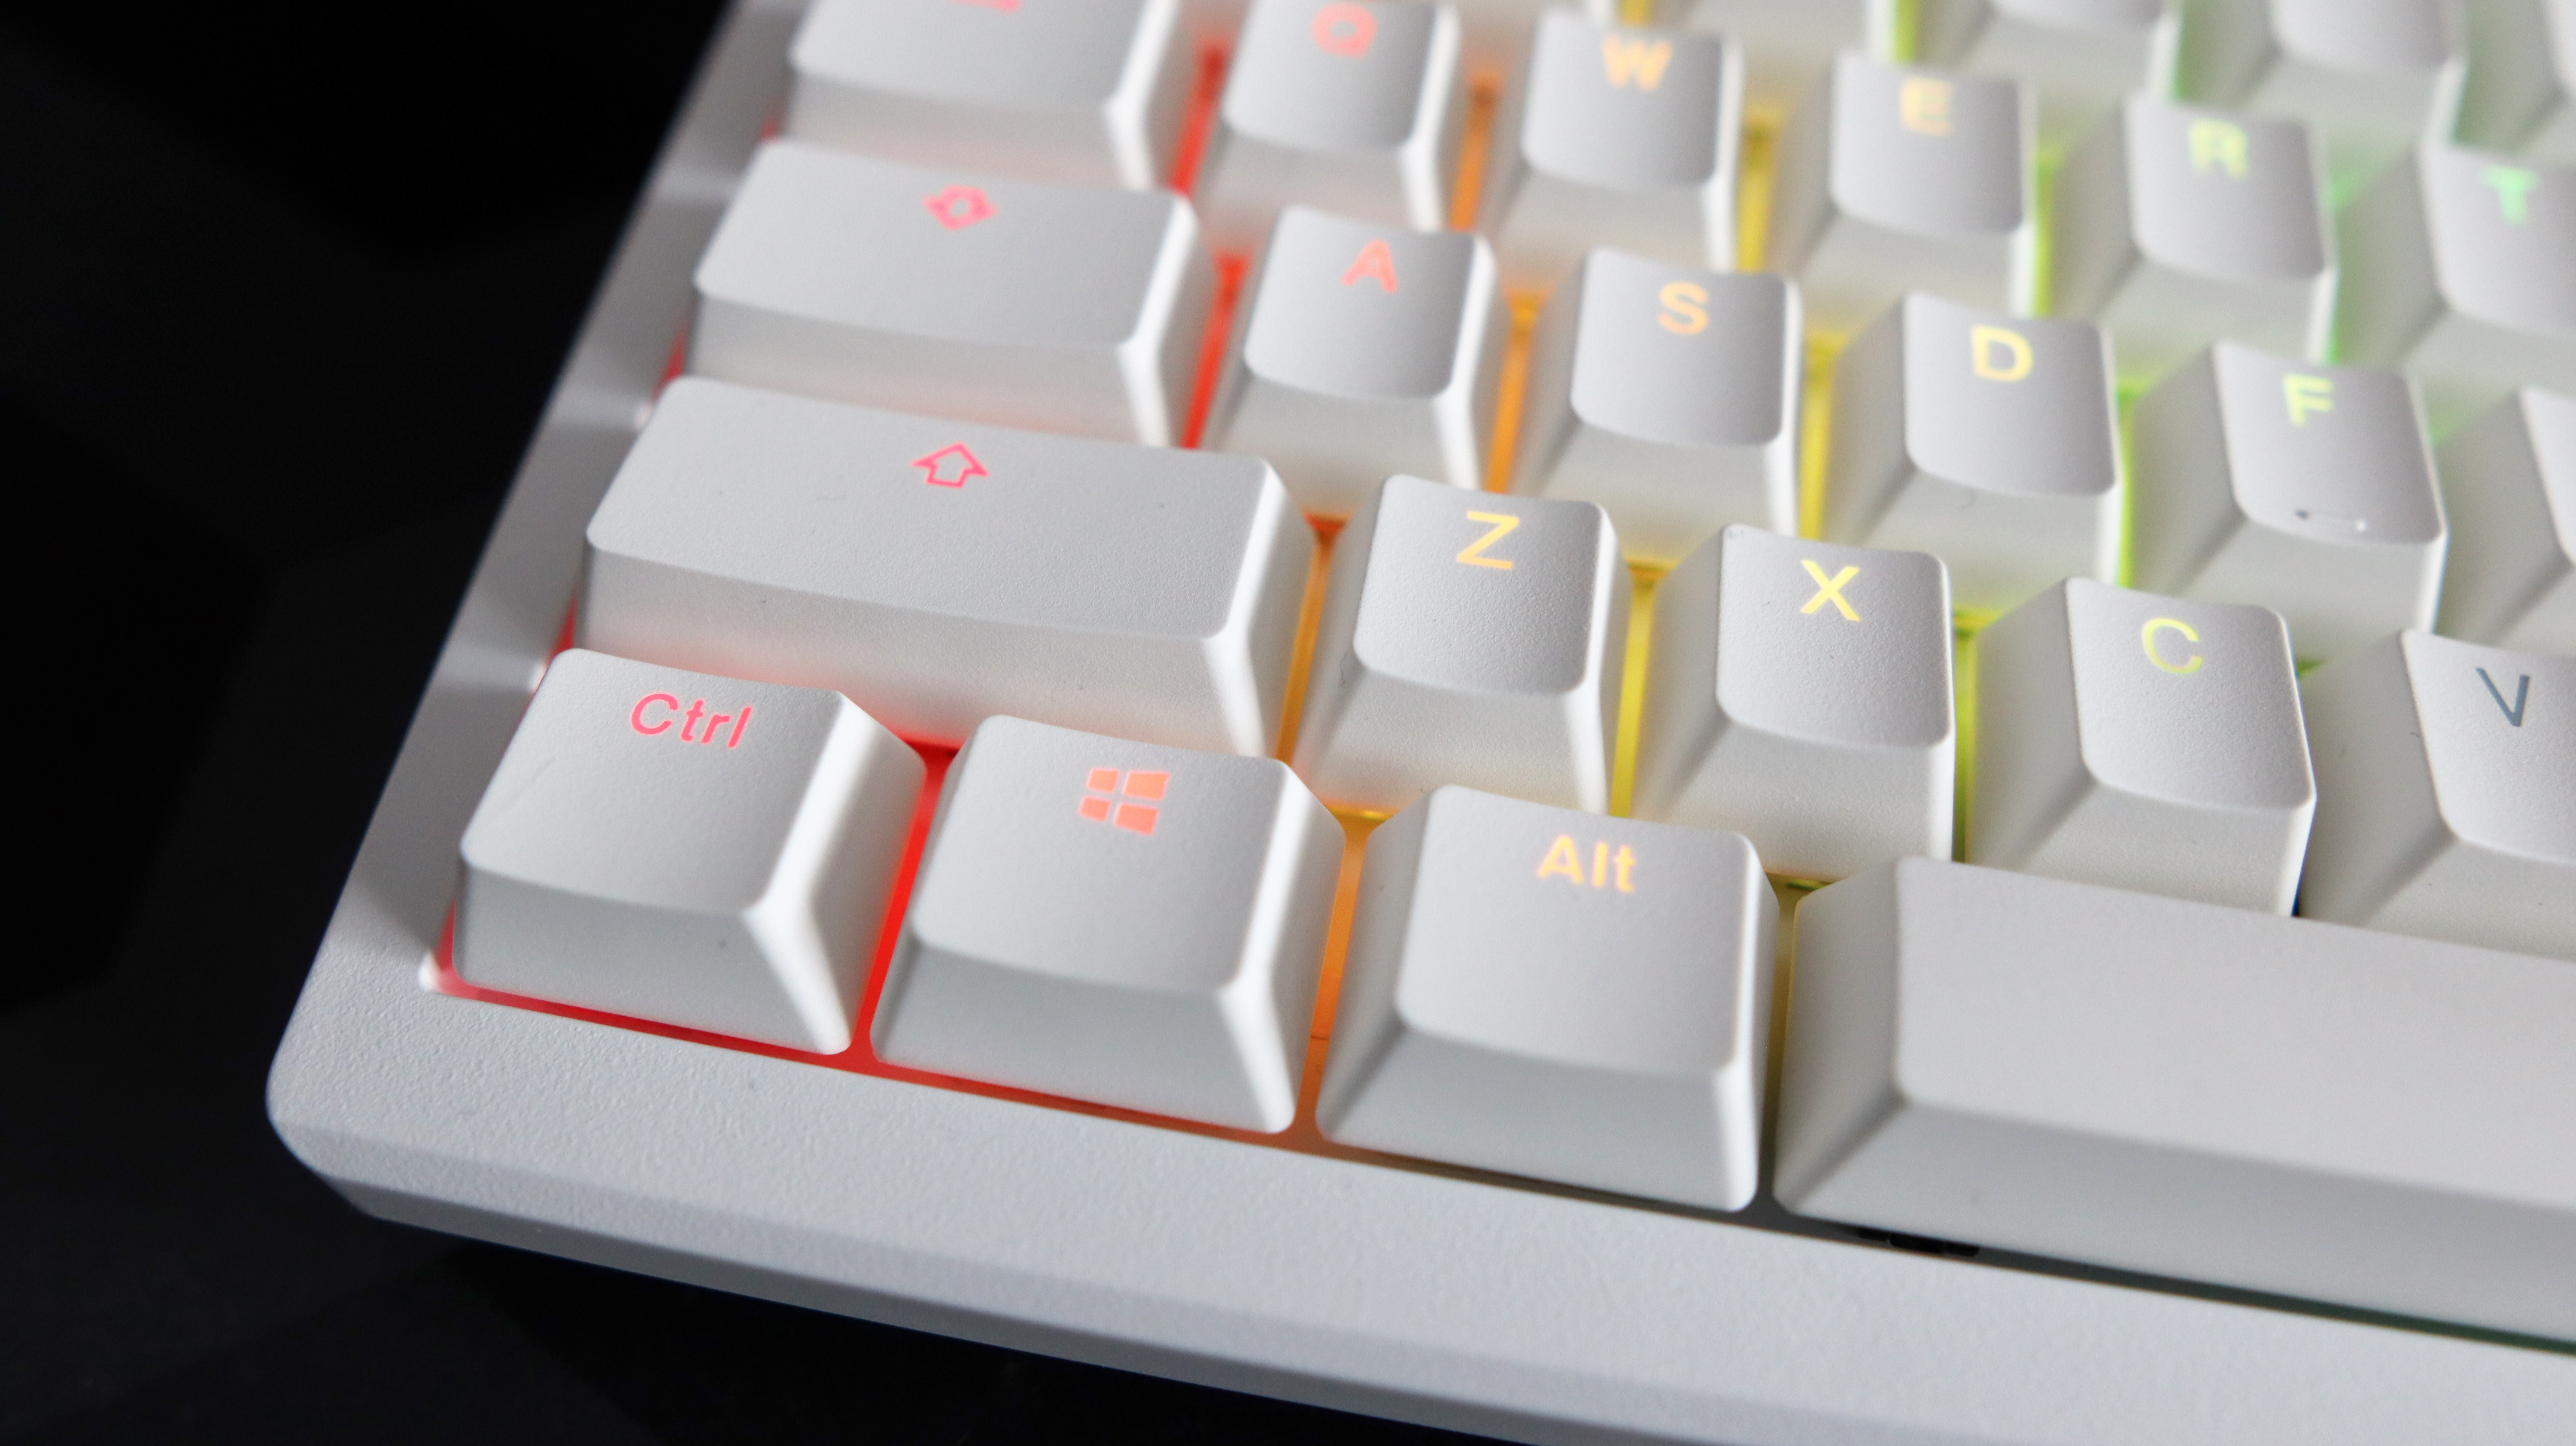 Ducky Zero 6108 gaming keyboard in white on a desk.